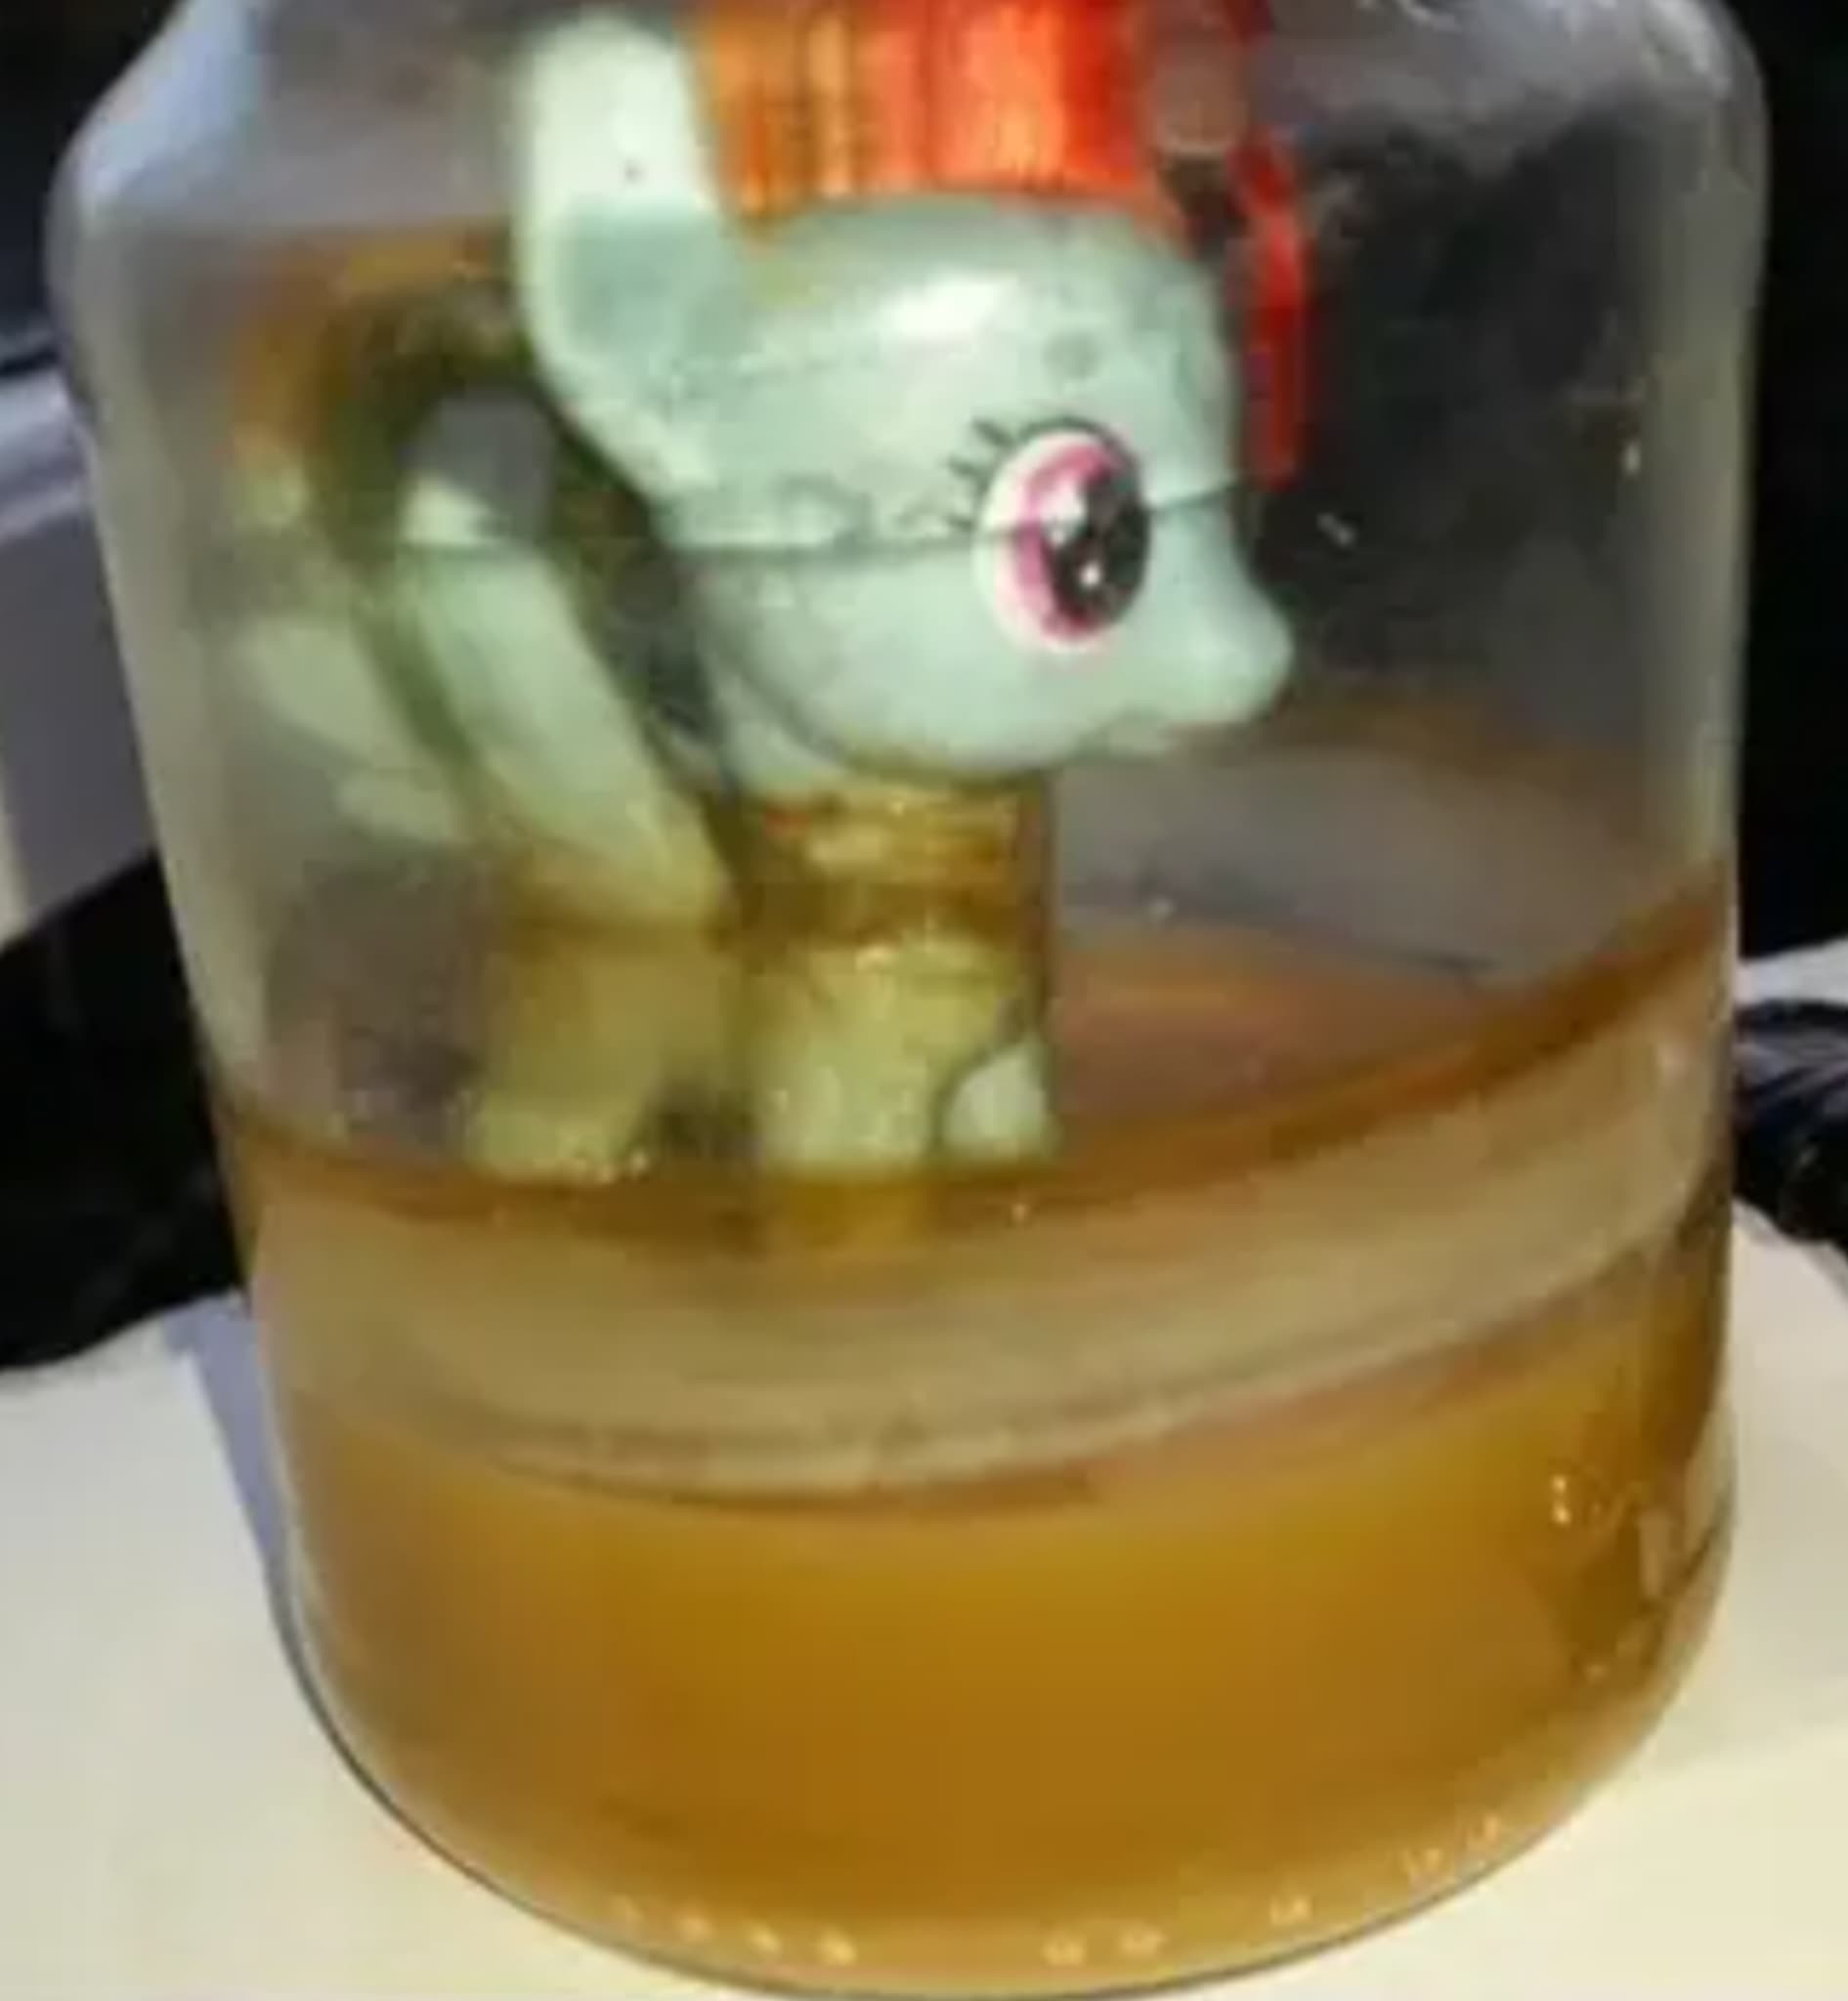 My little pony jar video